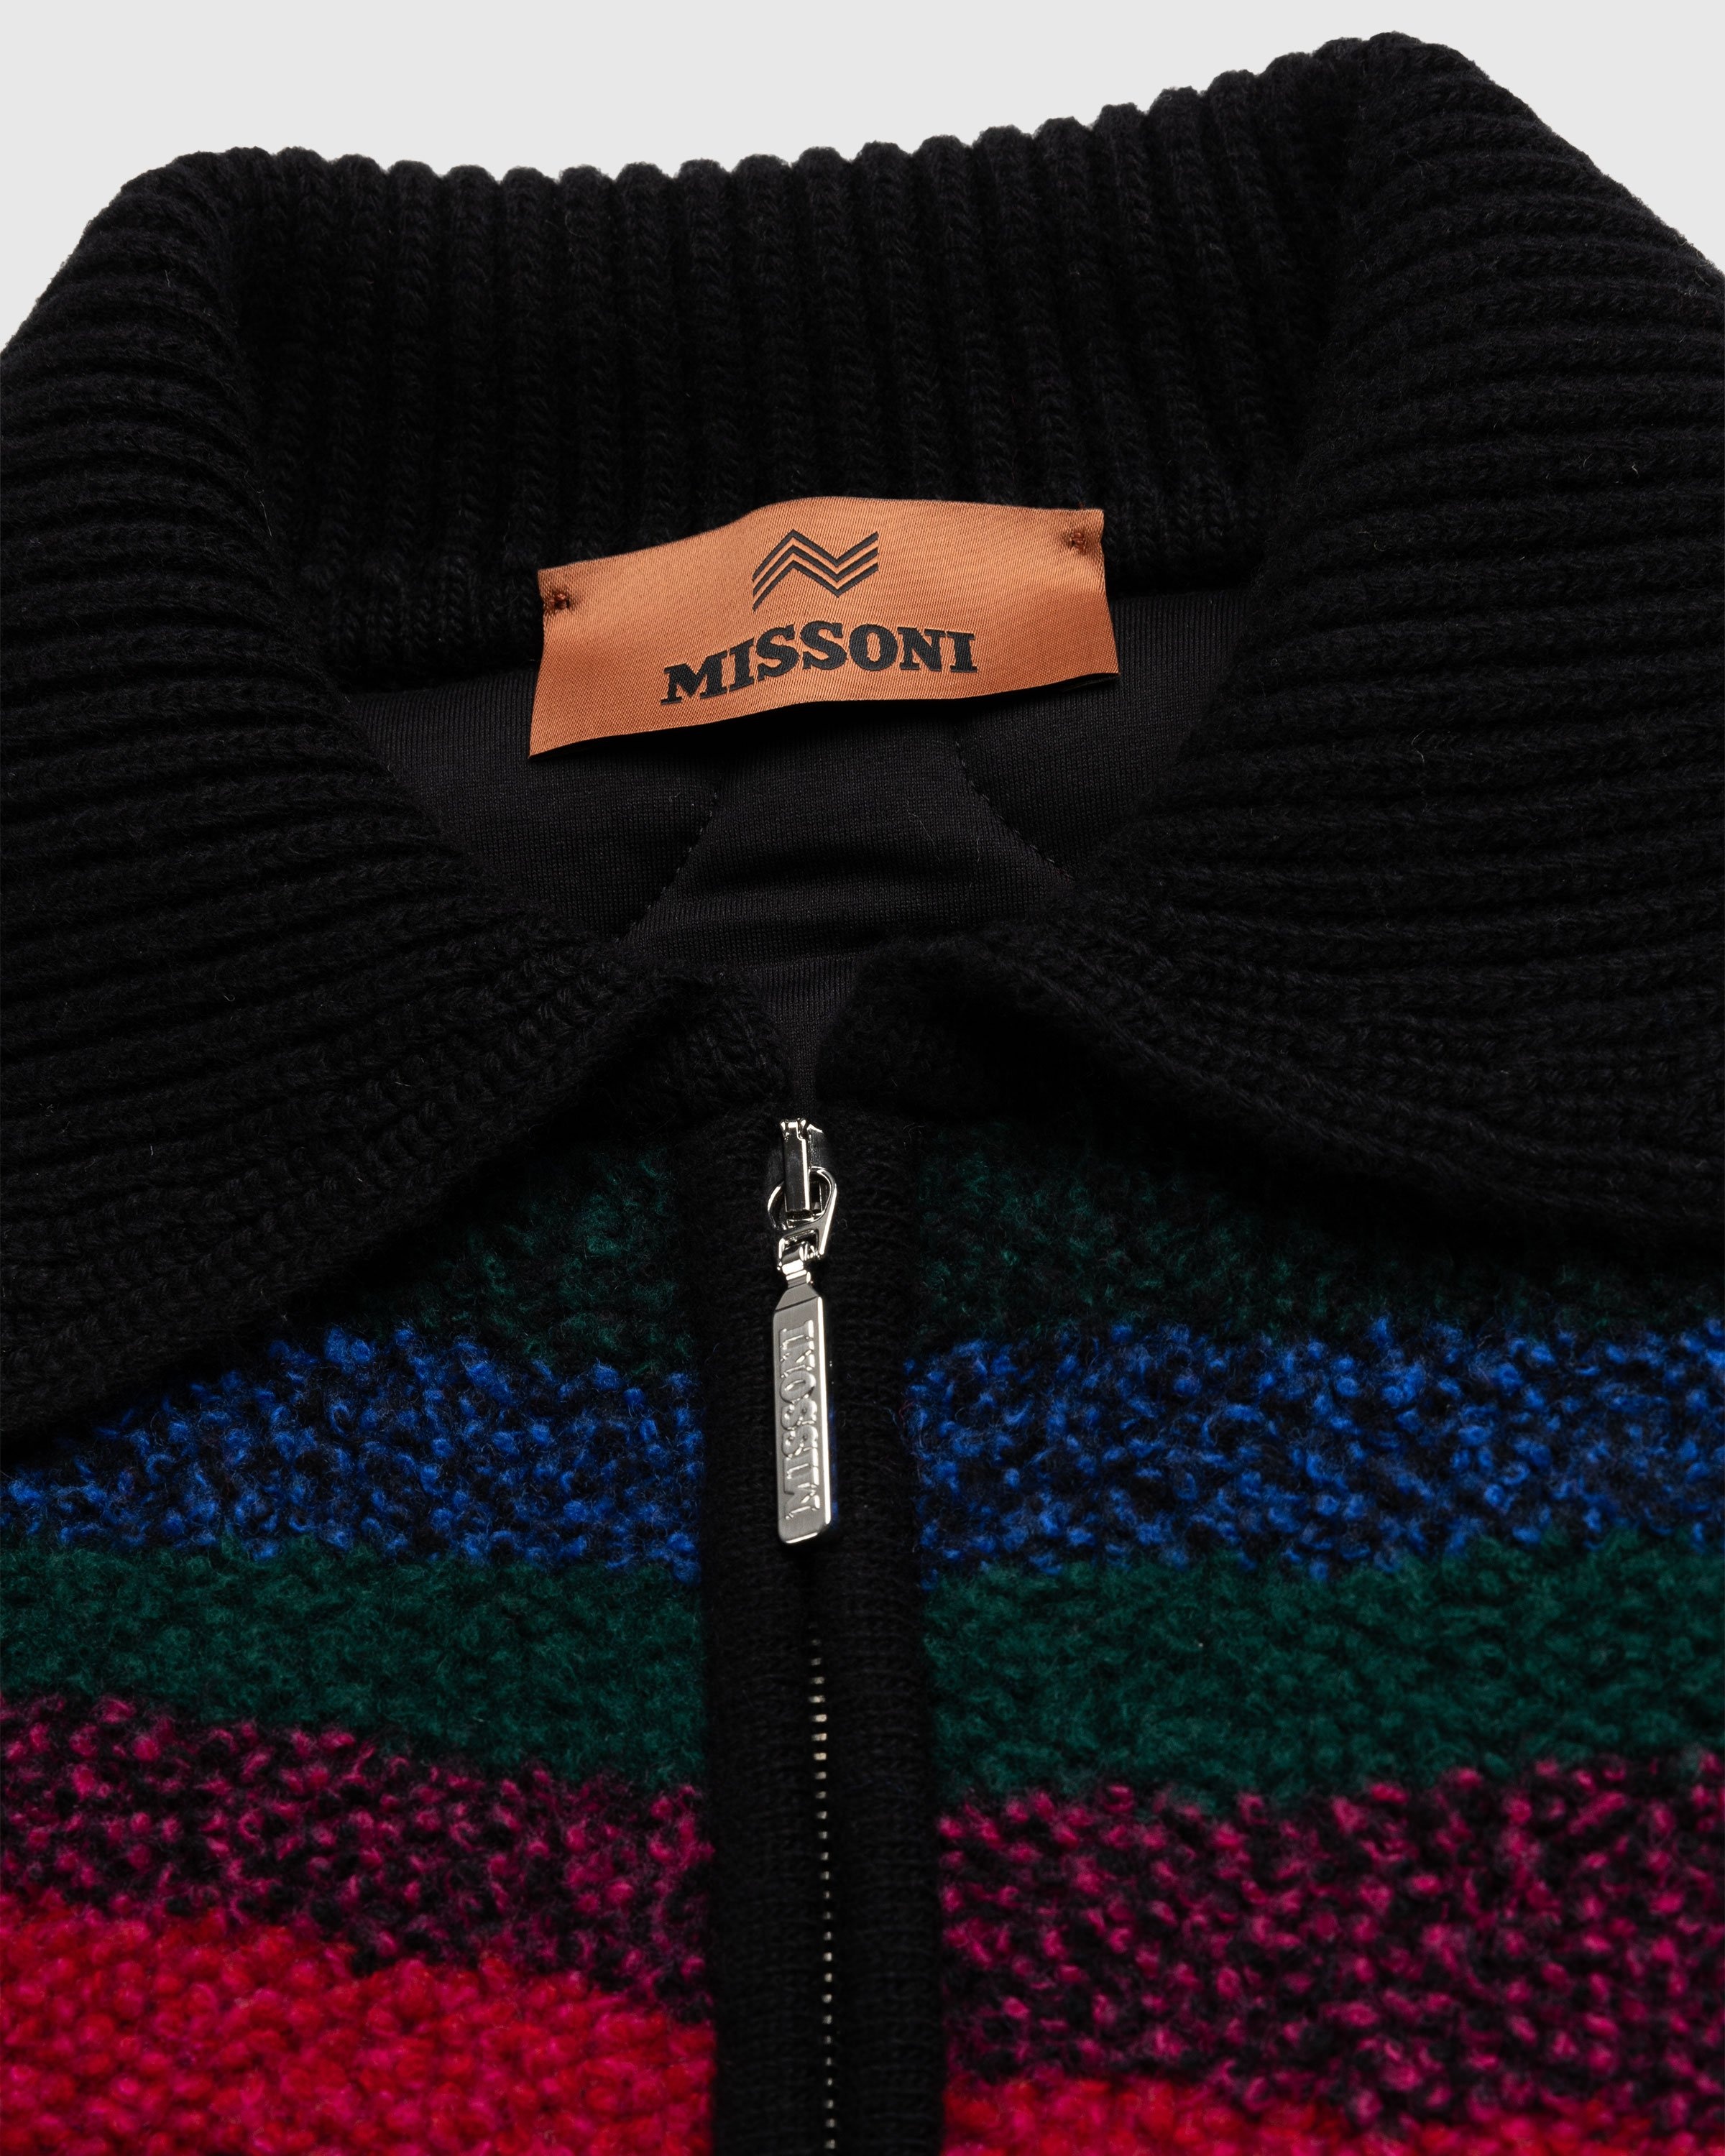 Missoni – Wool Bomber Jacket Black/Red | Highsnobiety Shop